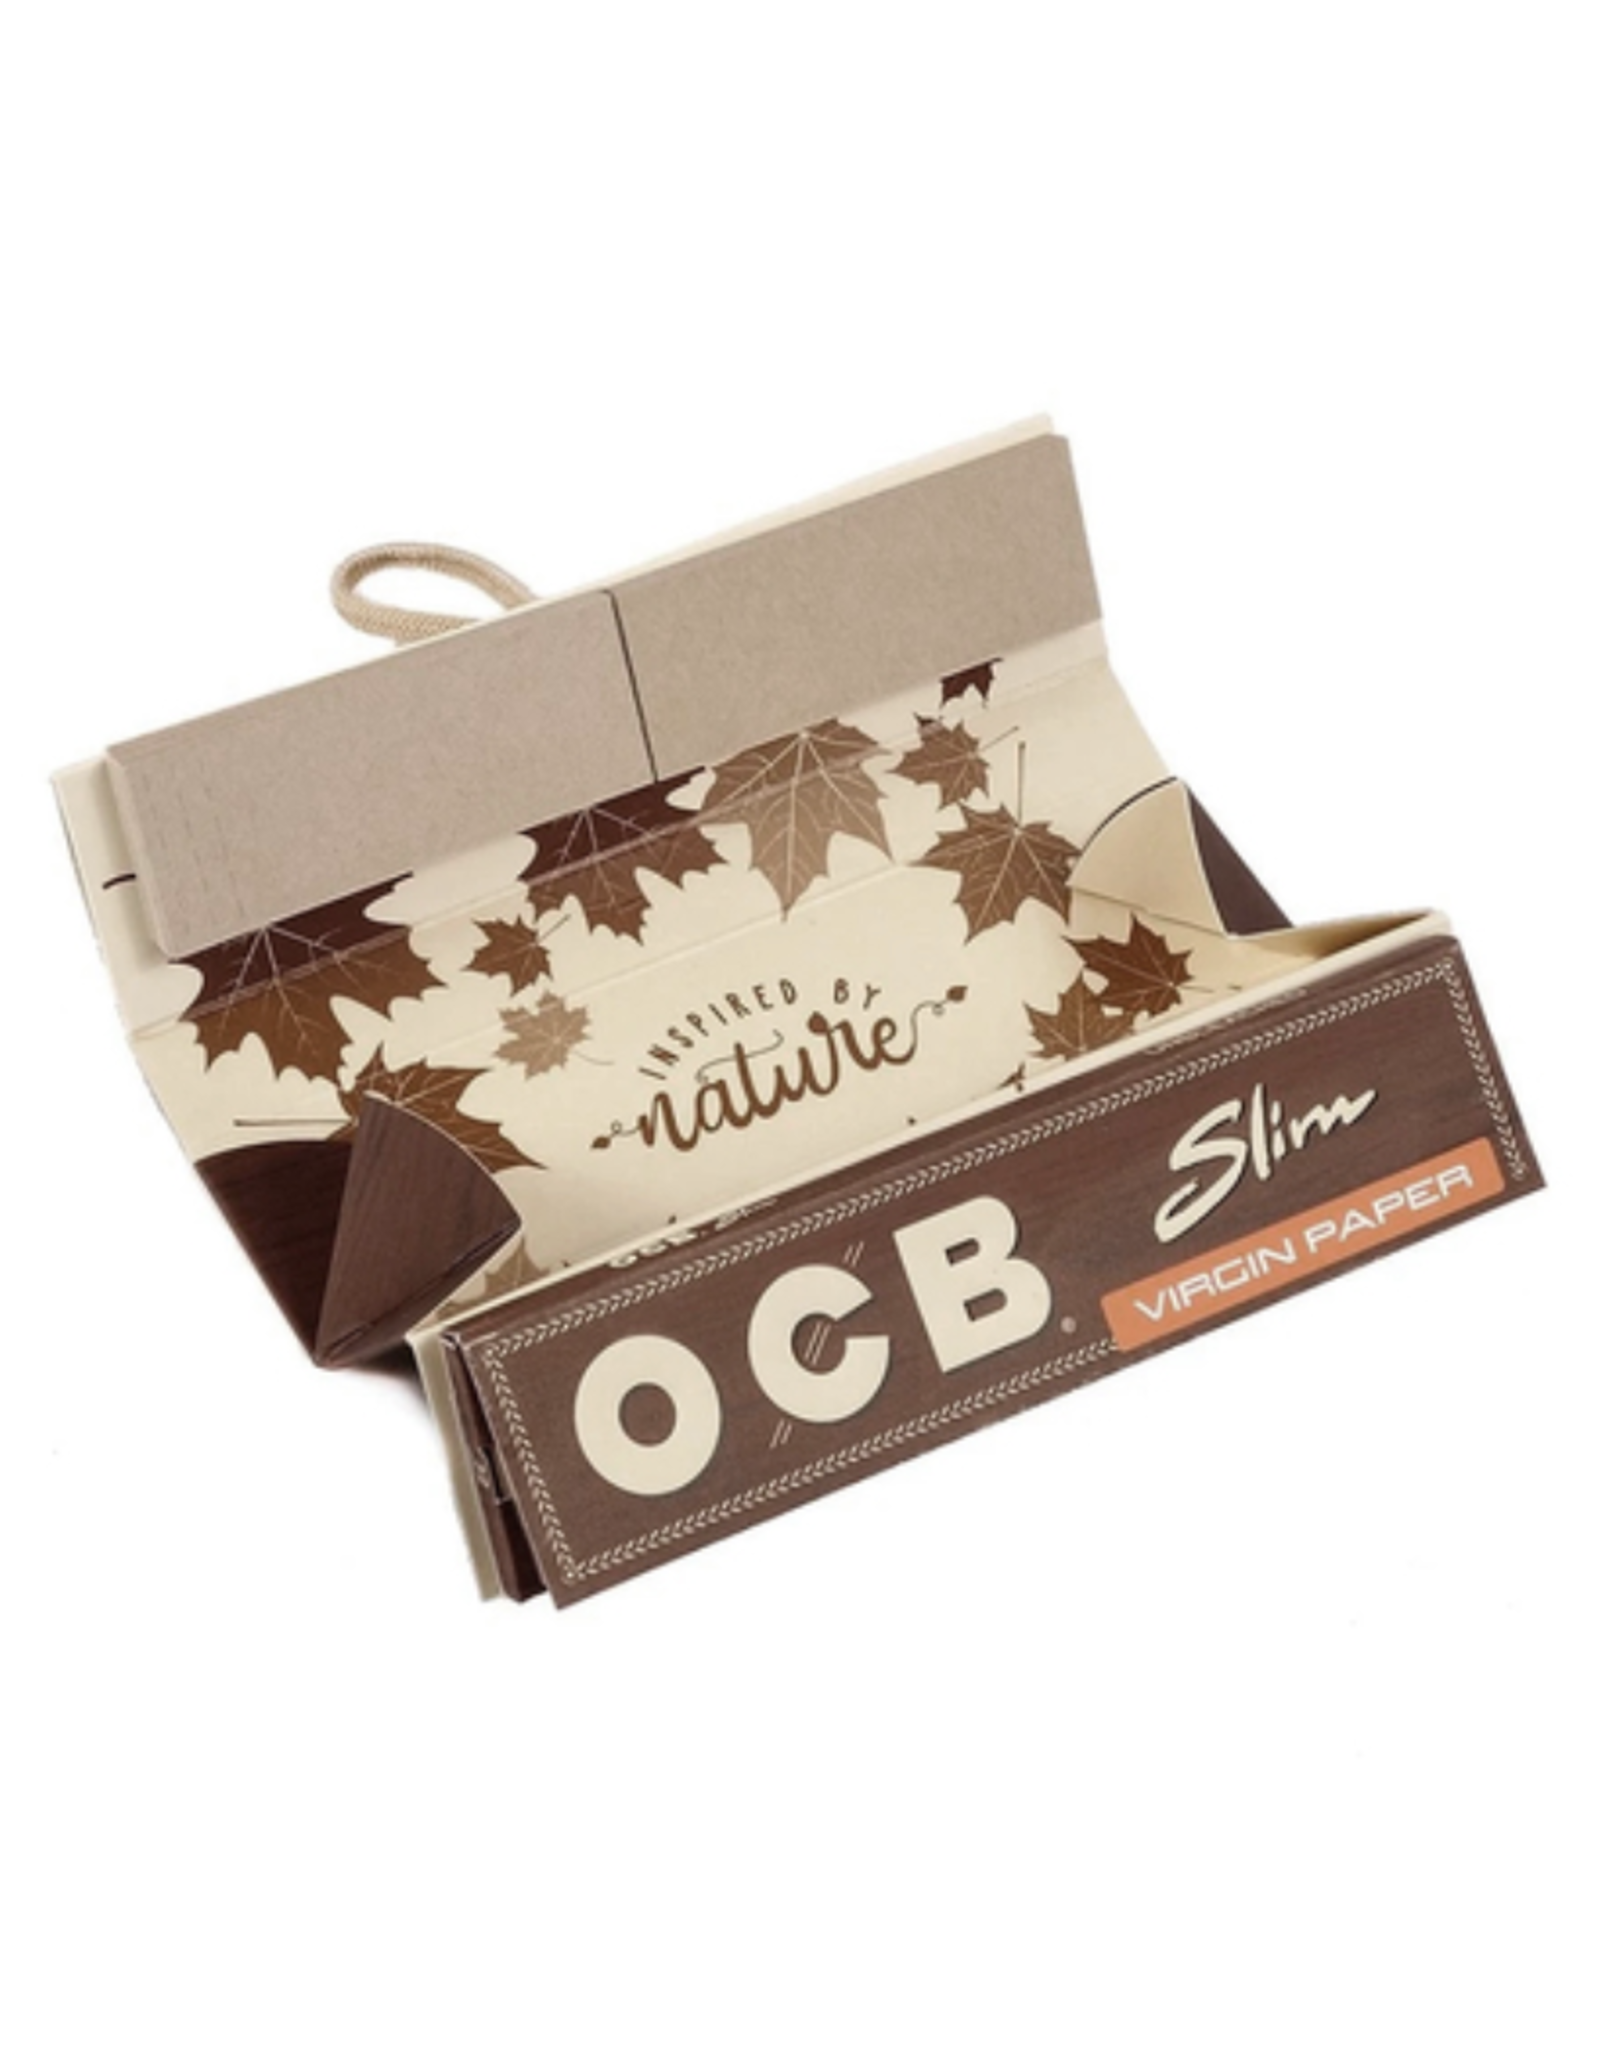 OCB OCB Virgin Unbleached King Size Slim Roll Kit